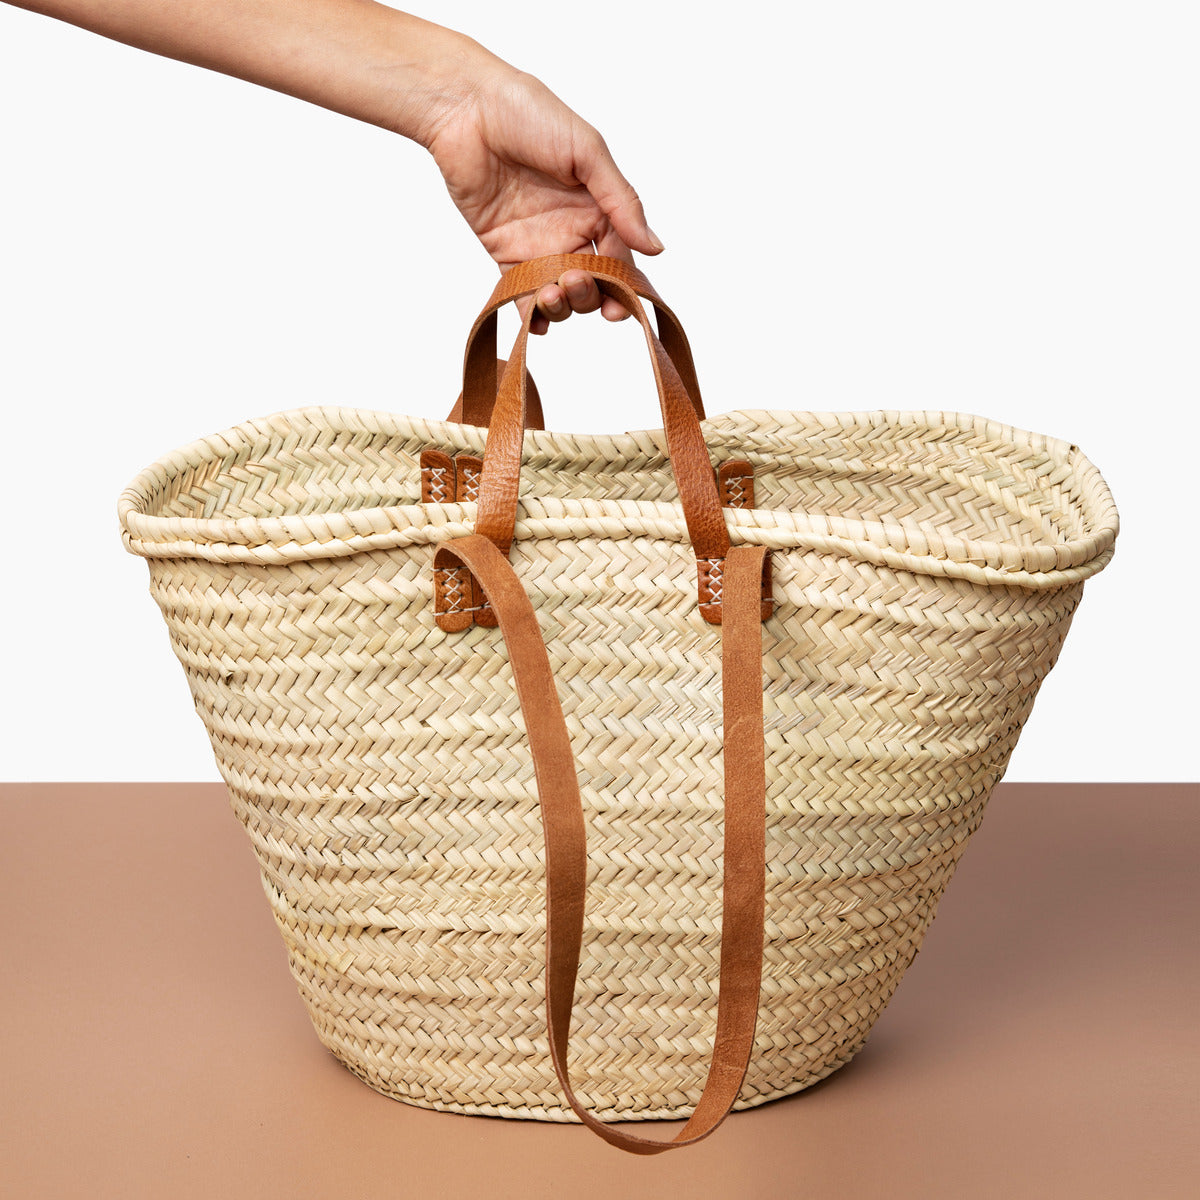 French Market Bag - Handwoven Palm Leaf Bag with Leather Handles and Shoulder Straps